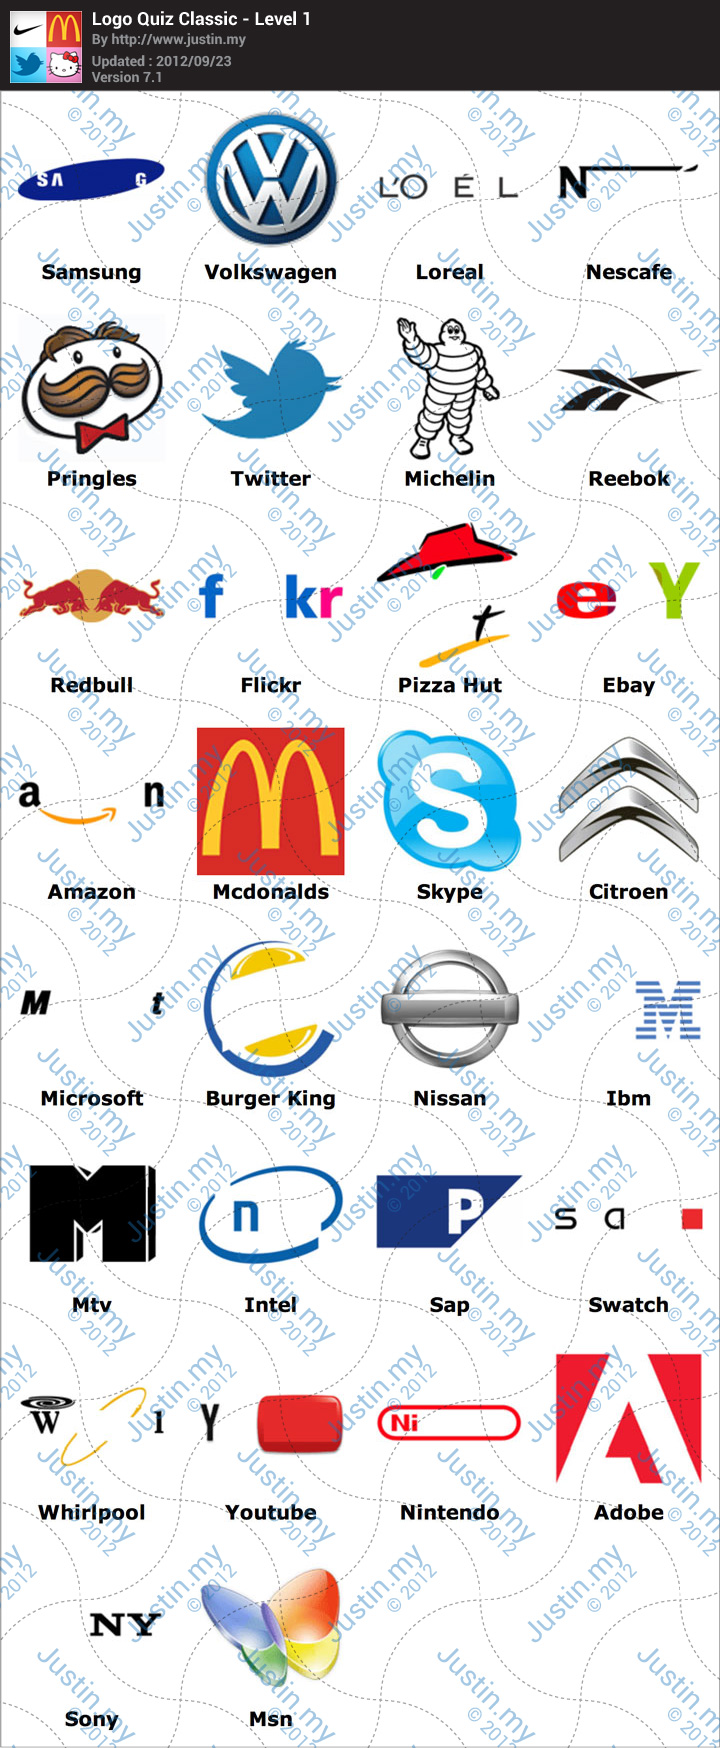 brand name logos quiz answers